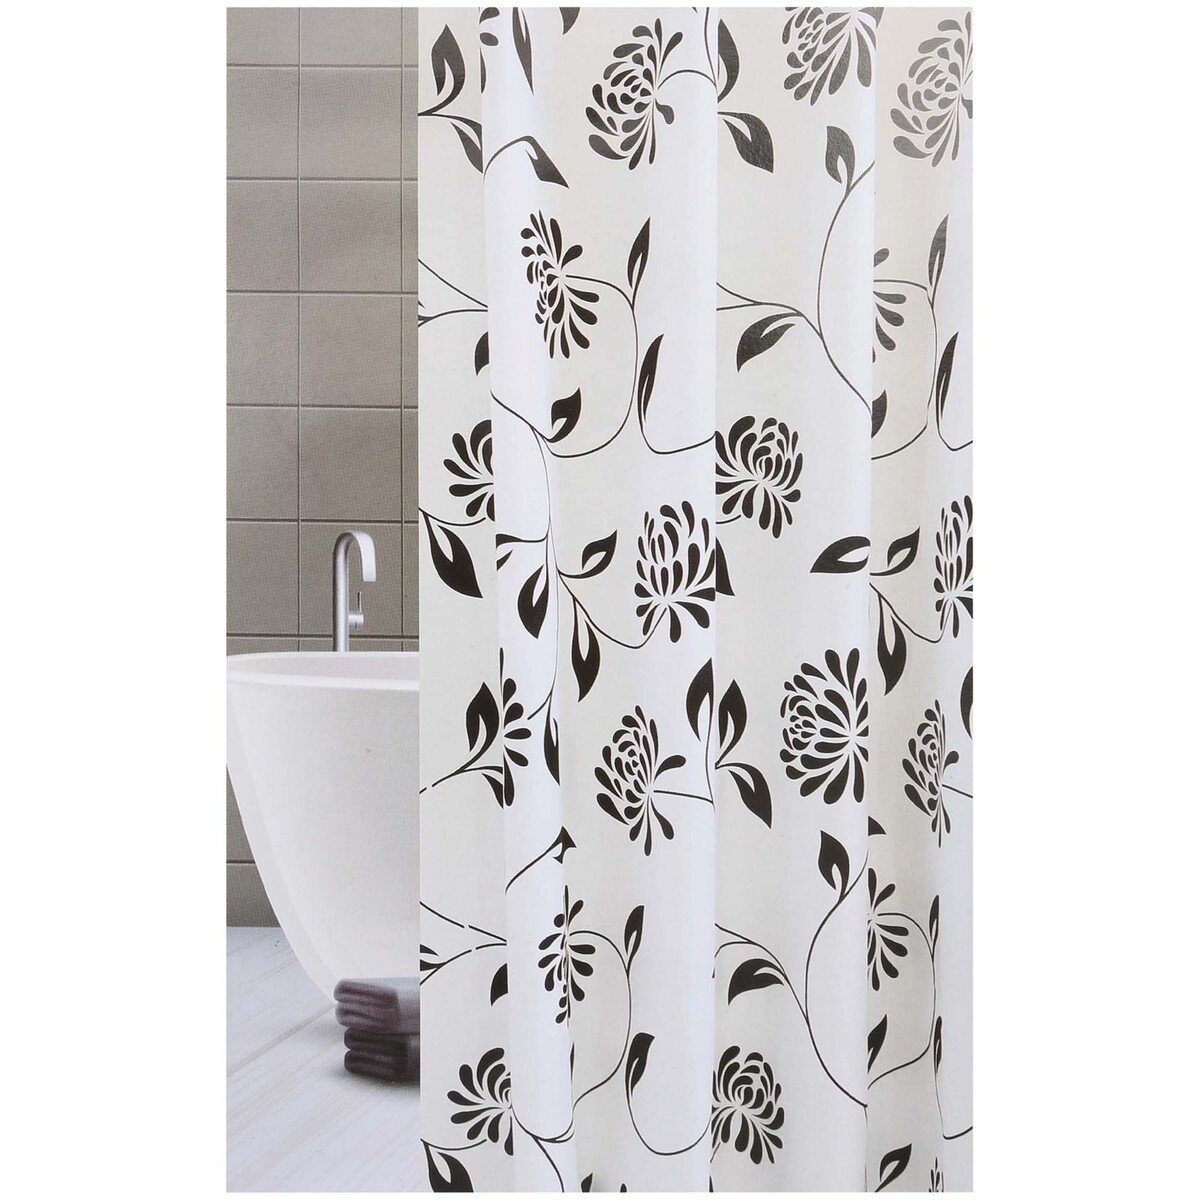 Barbarella Shower Curtain Polyester 180x240cm Assorted Per pc